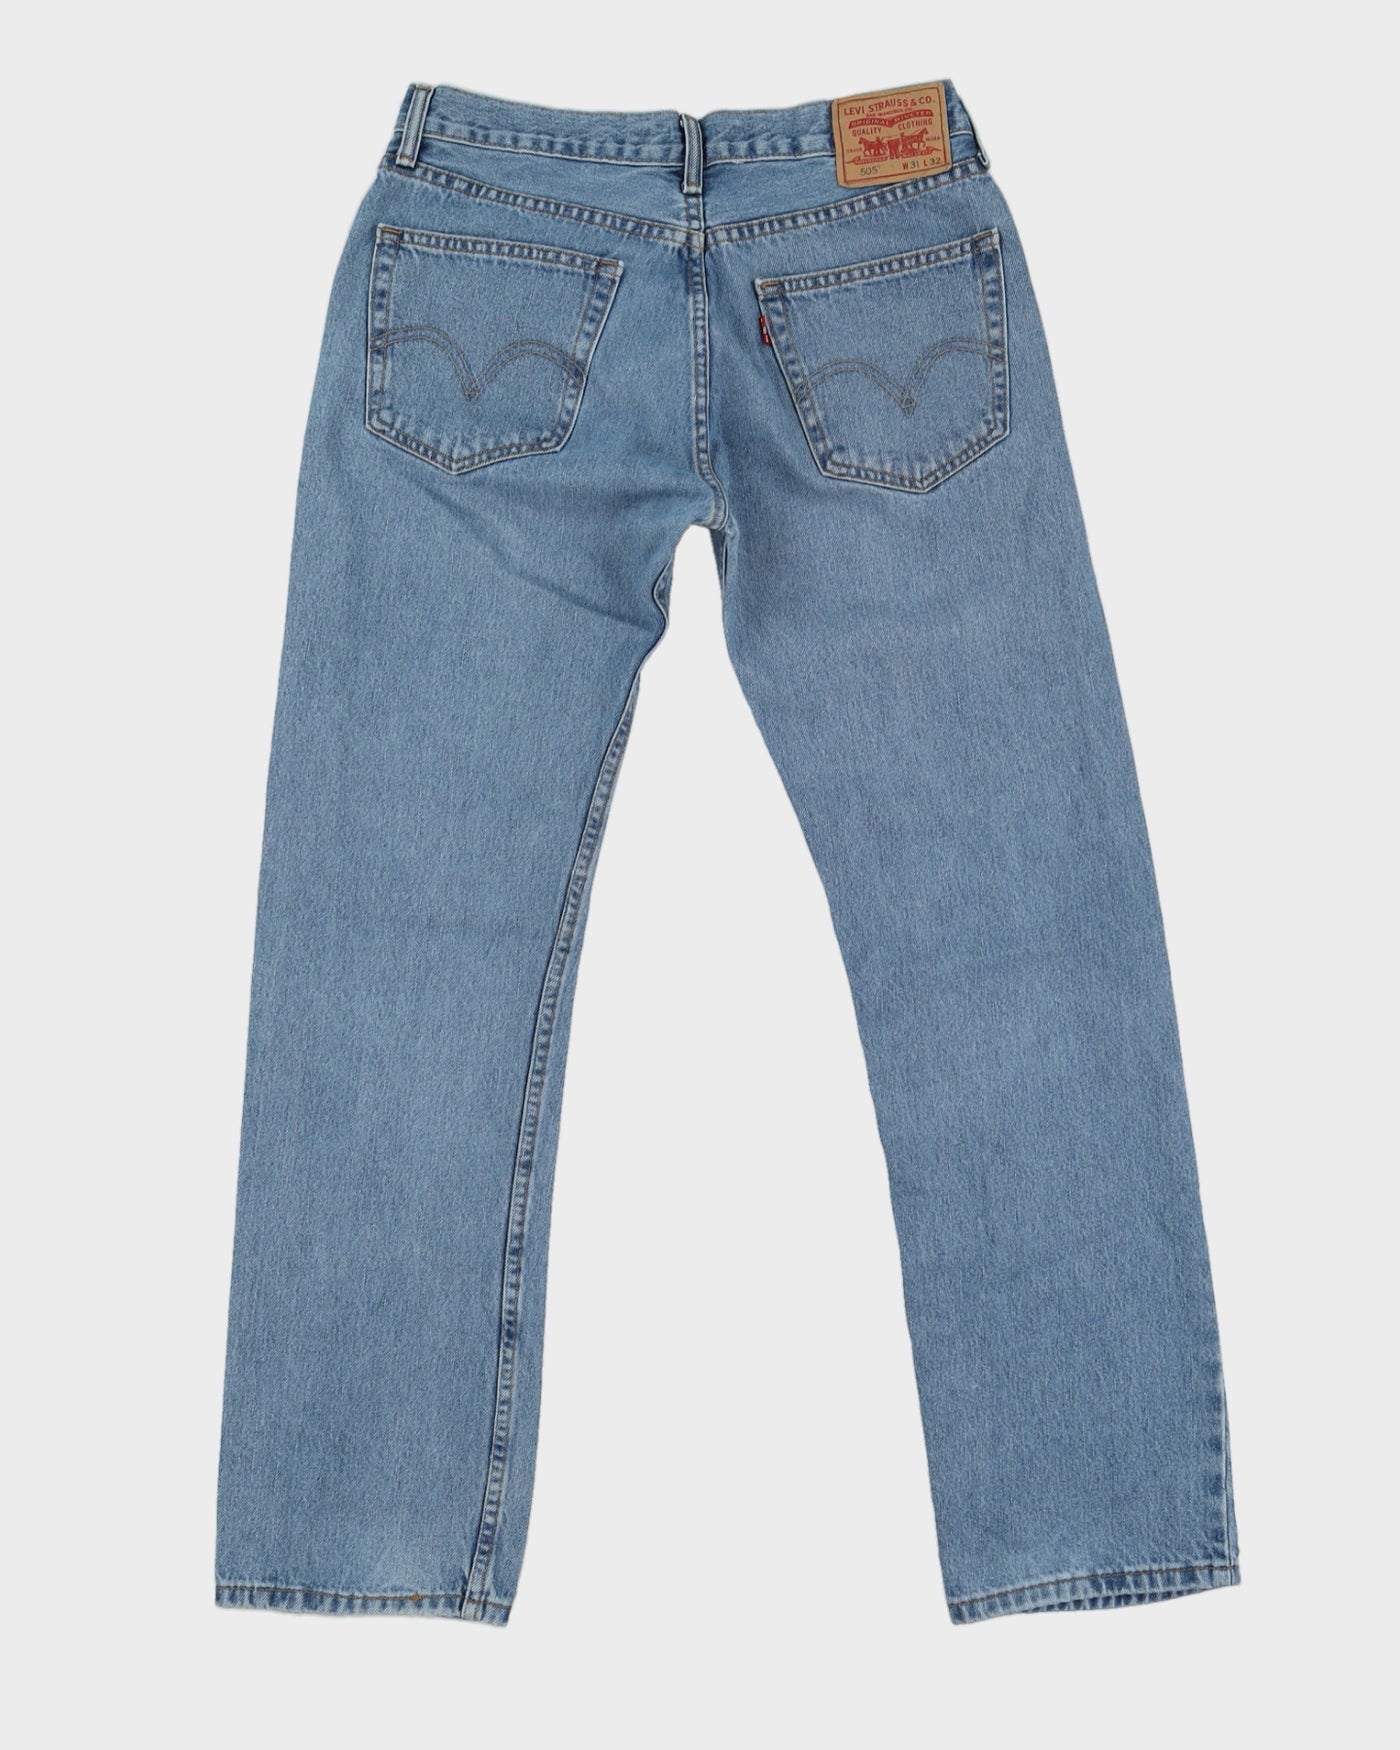 Levi's 505 Blue Light Washed Jeans - W31 L32